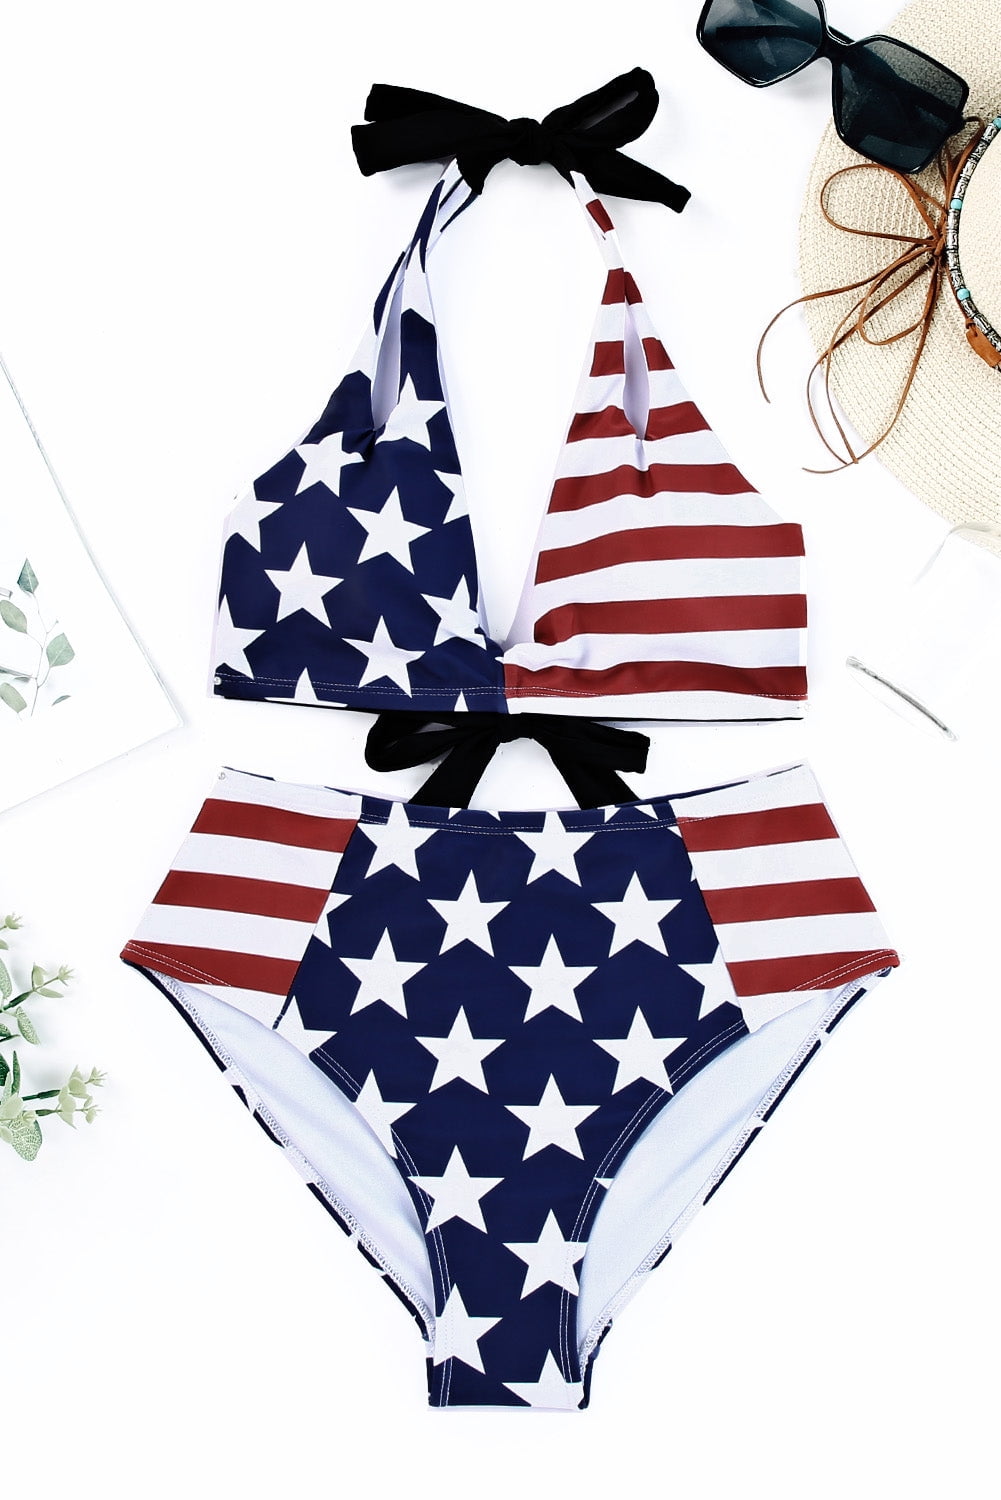 Stars Stripes American Flag Pattern Patchwork Swimsuit Bikini